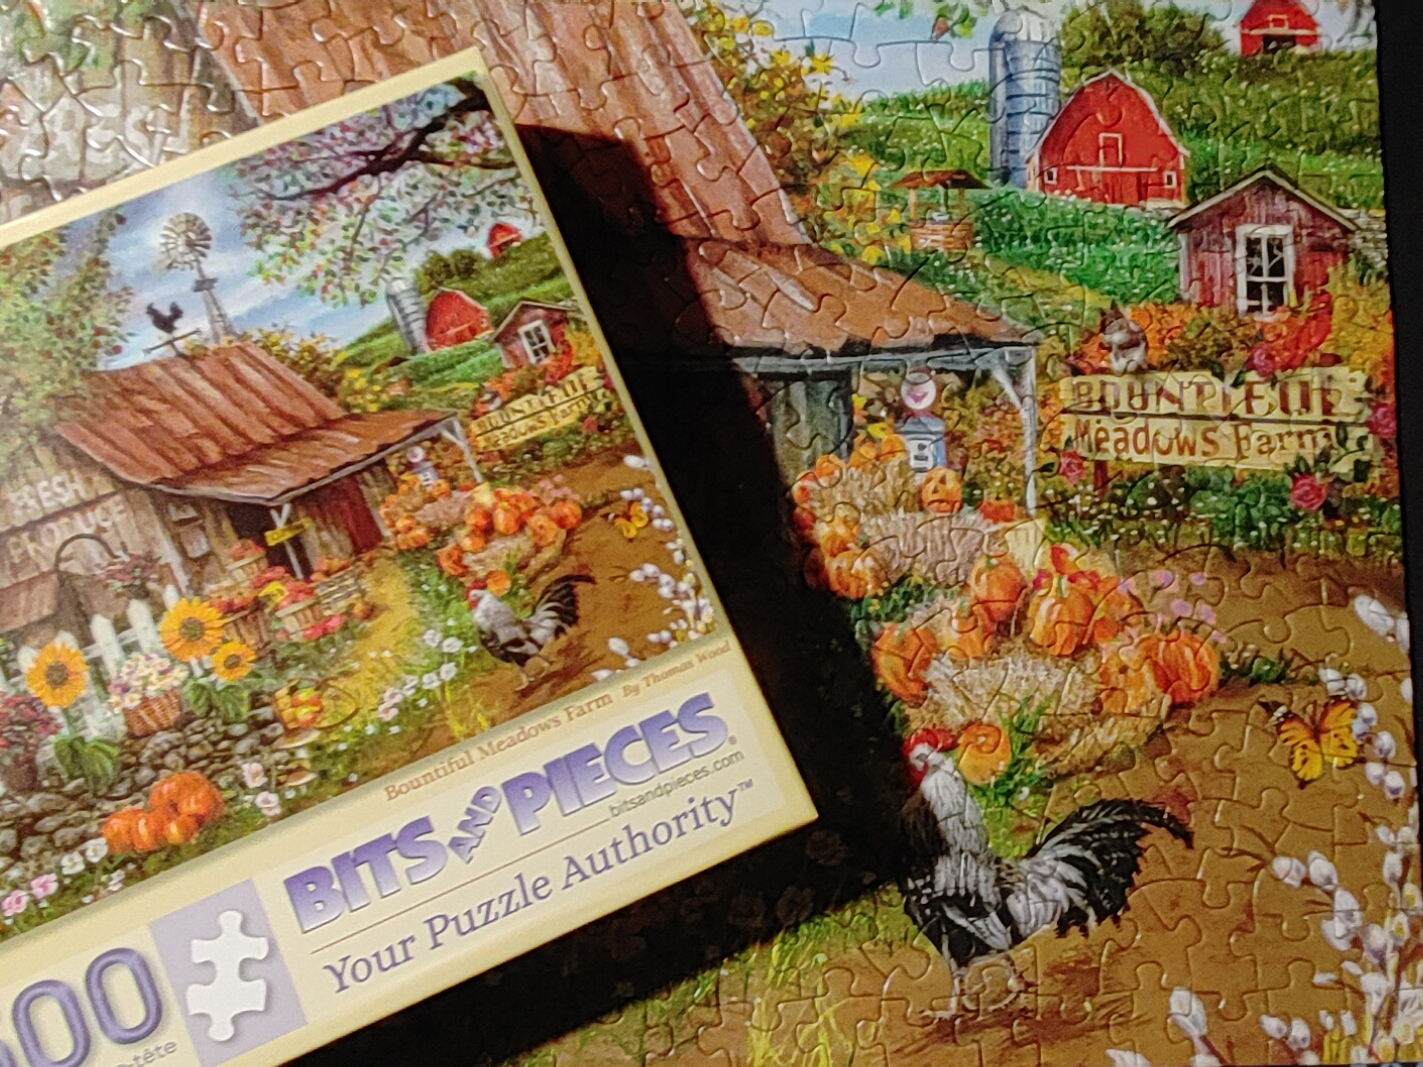 Bountiful Meadow Farms puzzle